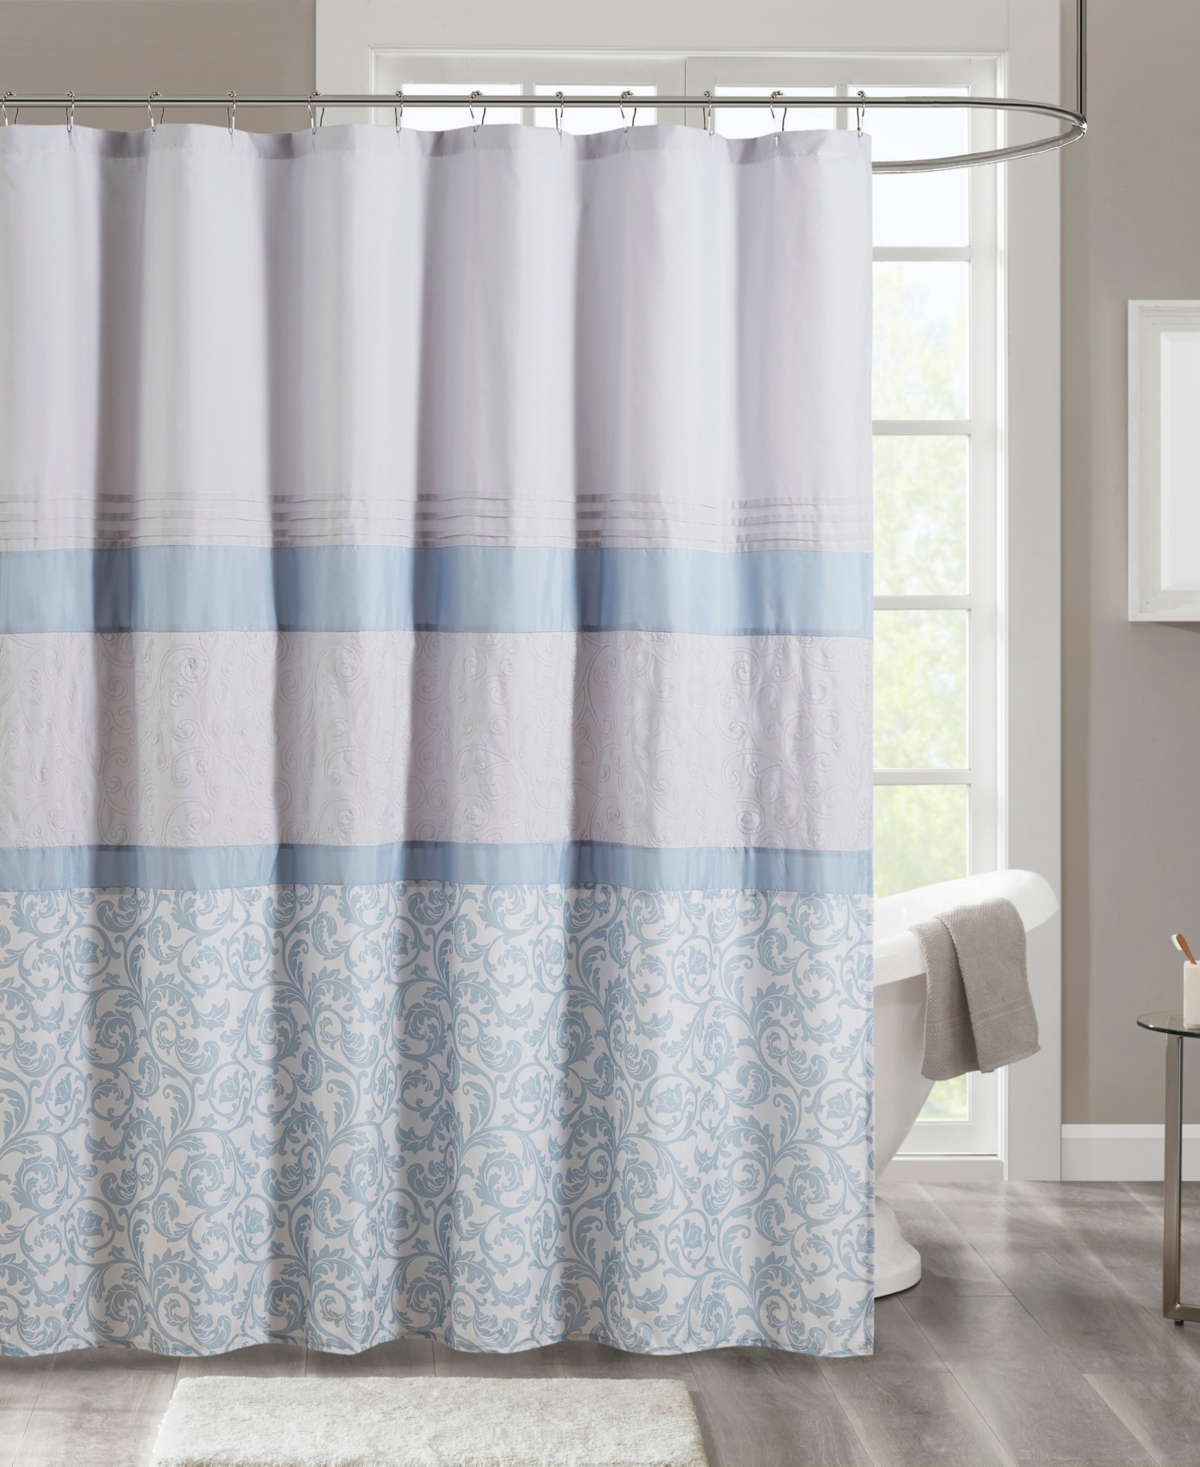 510 Design Ramsey Embroidered Shower Curtain, 72 x 72 Bedding